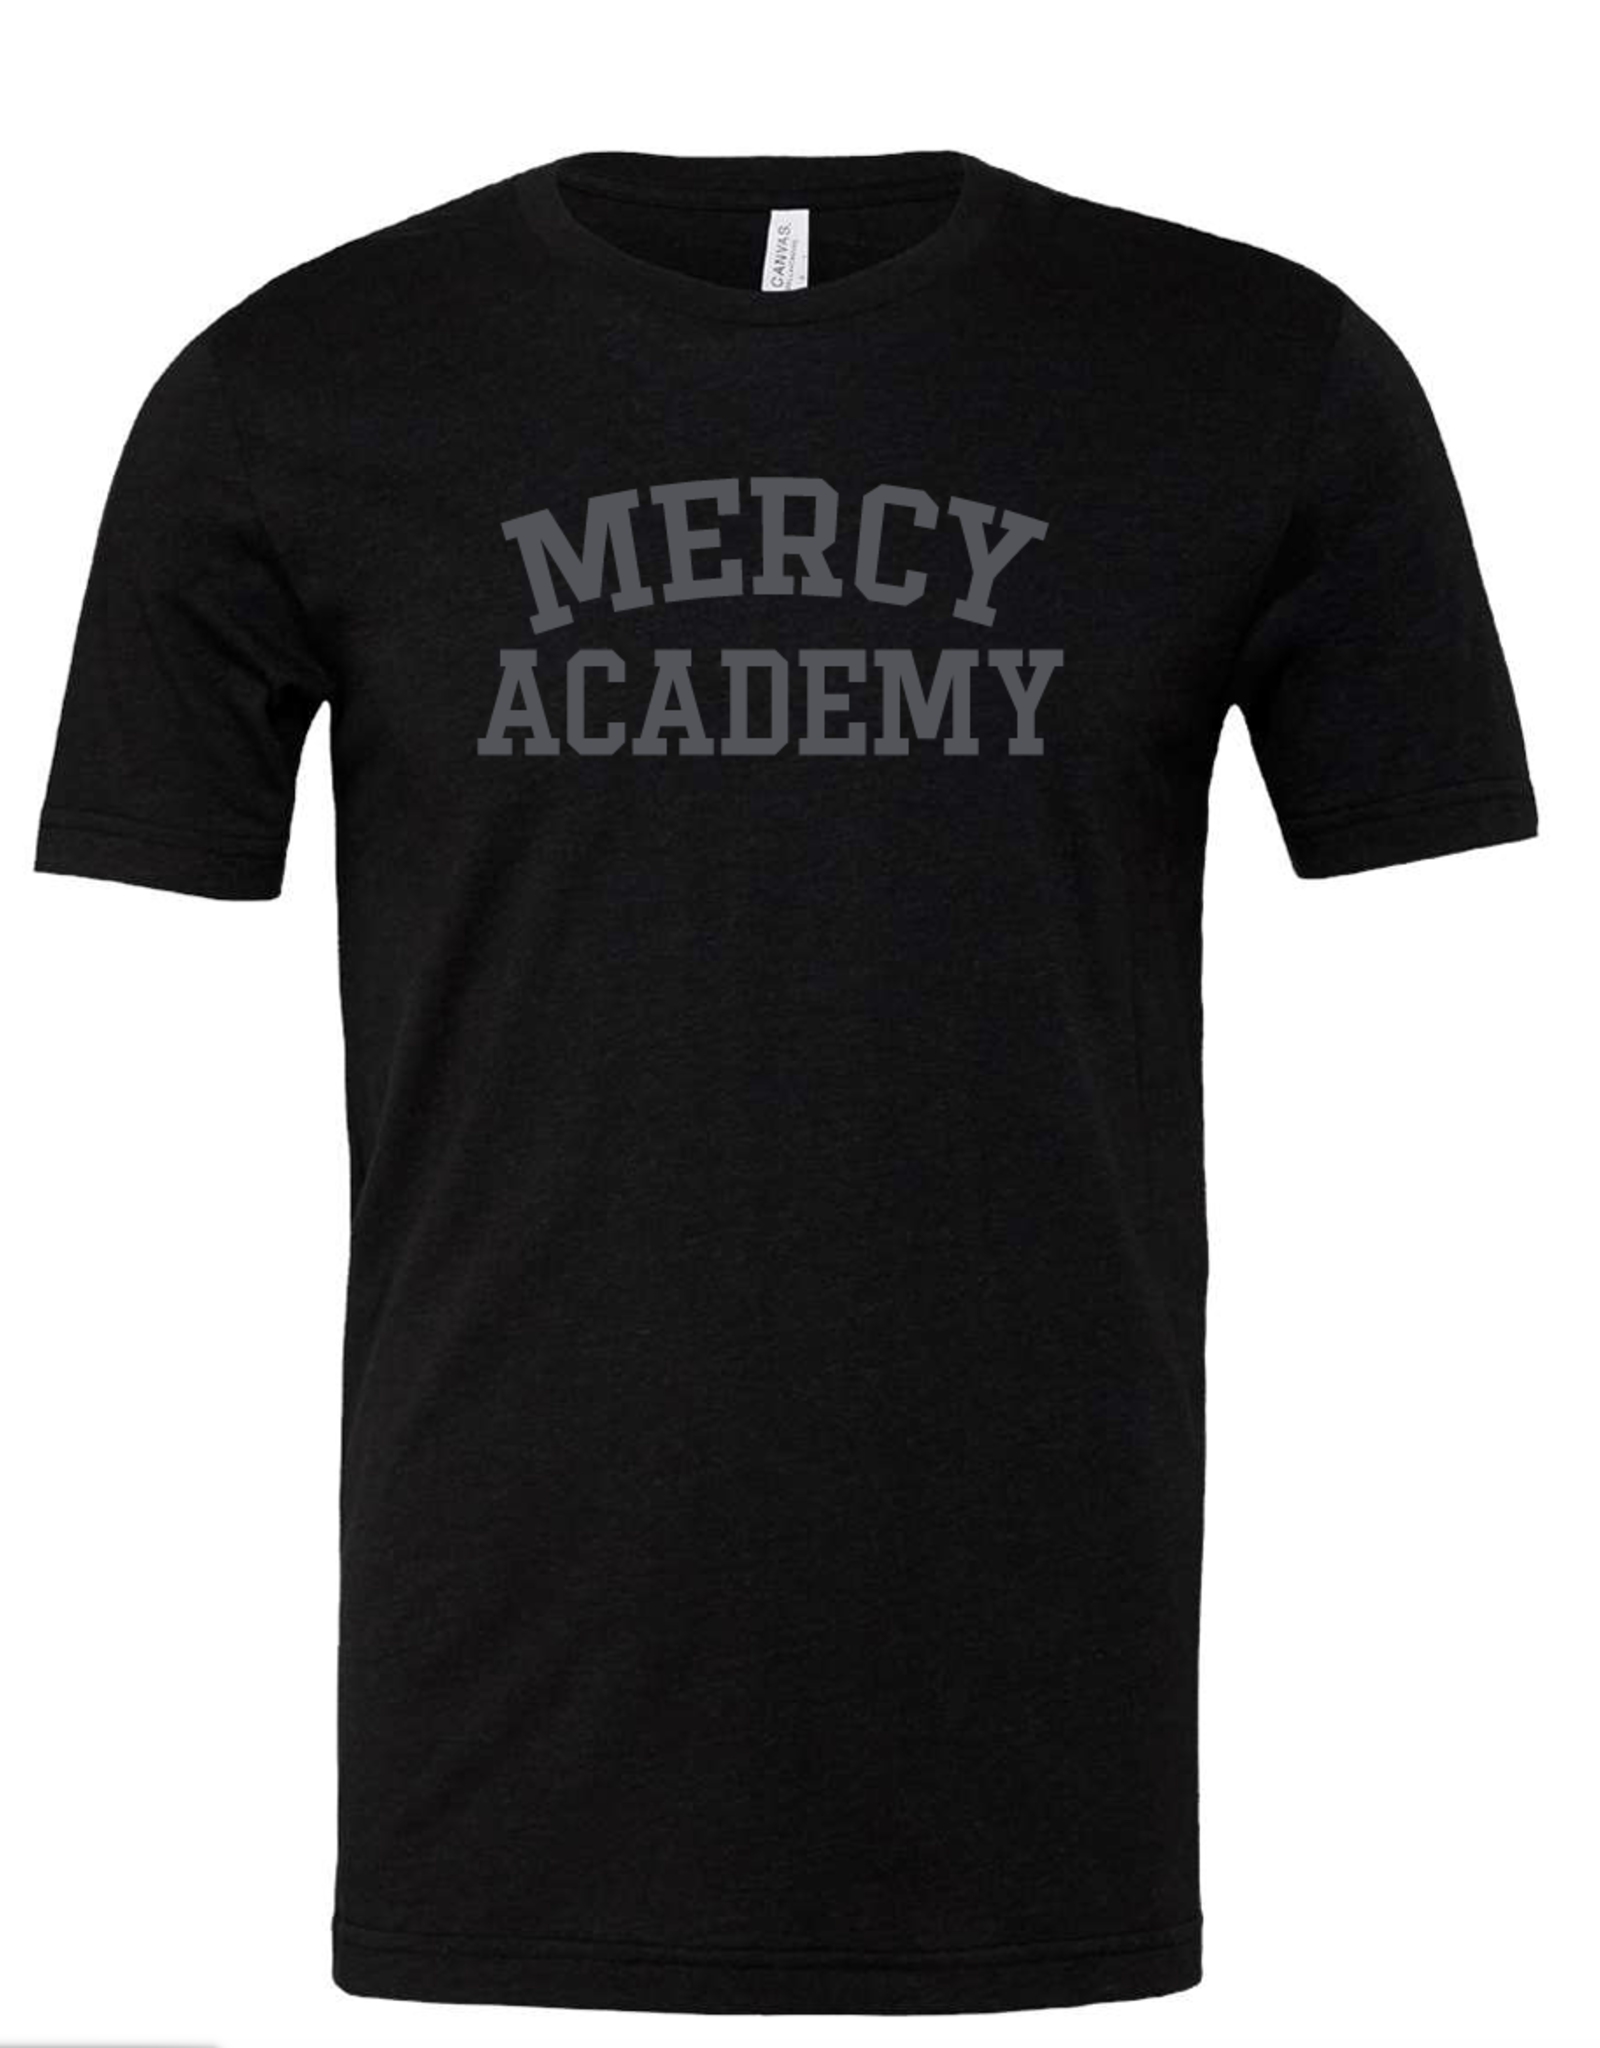 Gildan Black on Black "Mercy Academy" tee